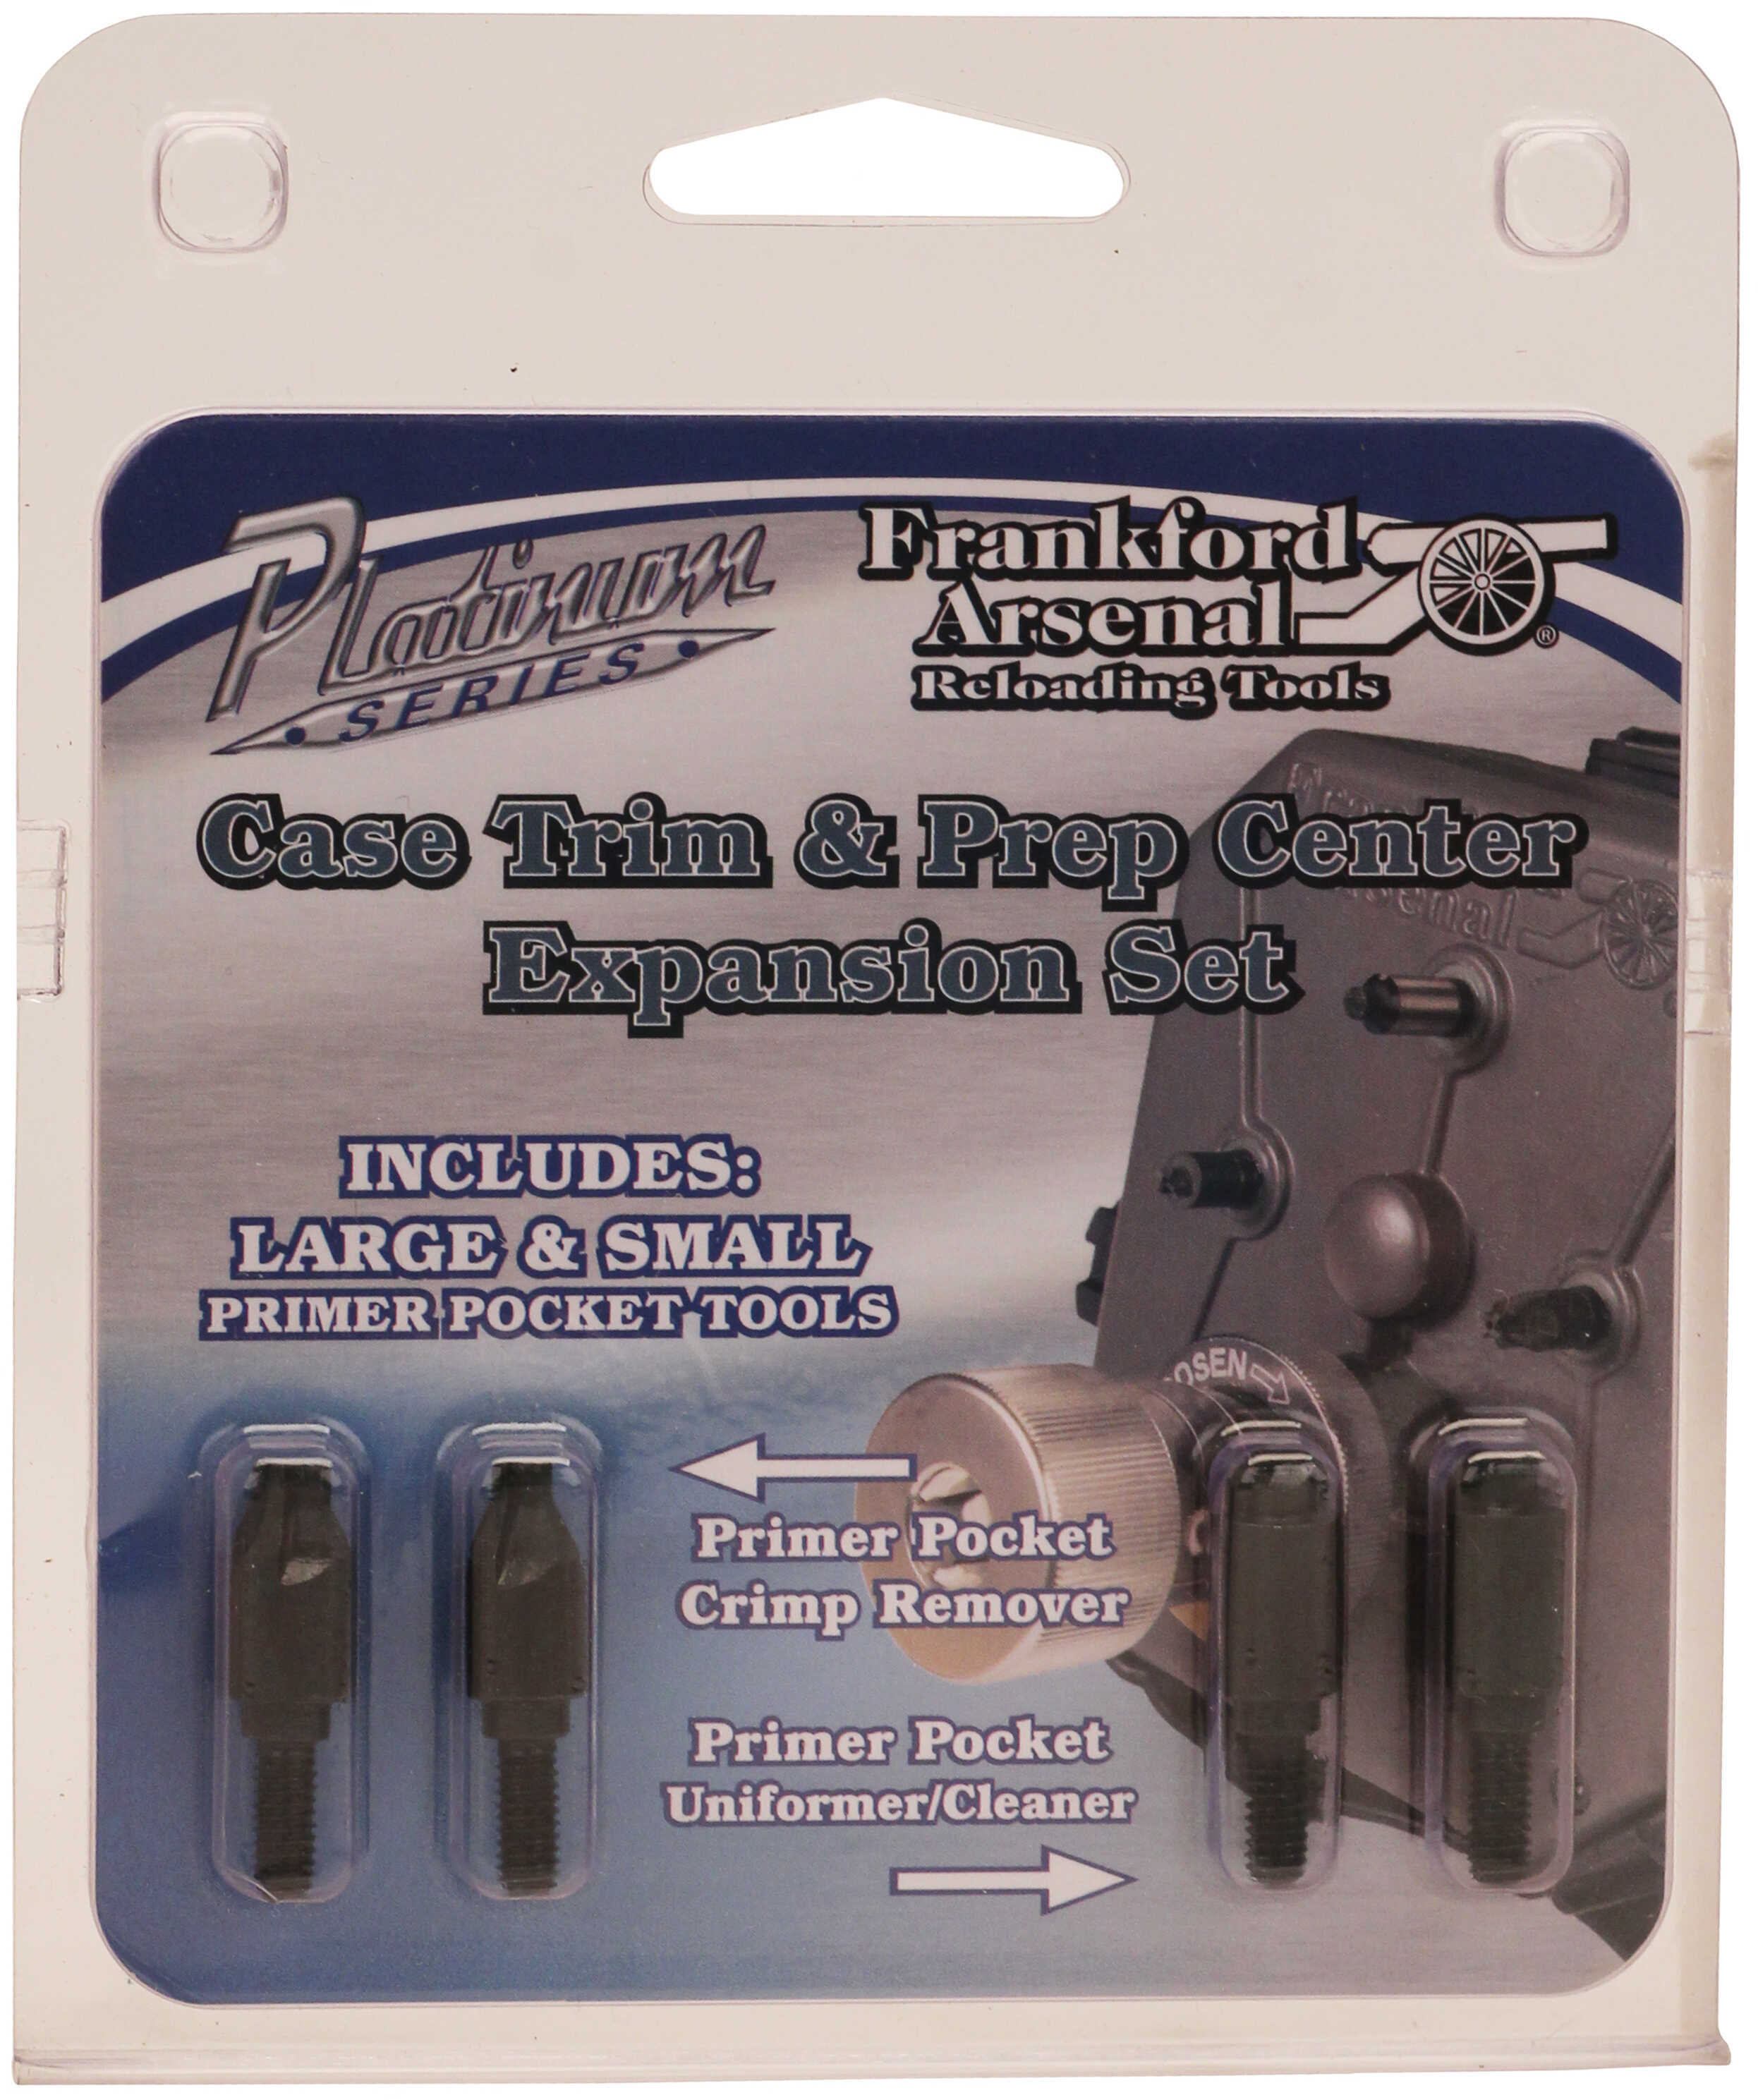 Frankford Arsenal Platinum Series Case Prep Power Expansion Kit